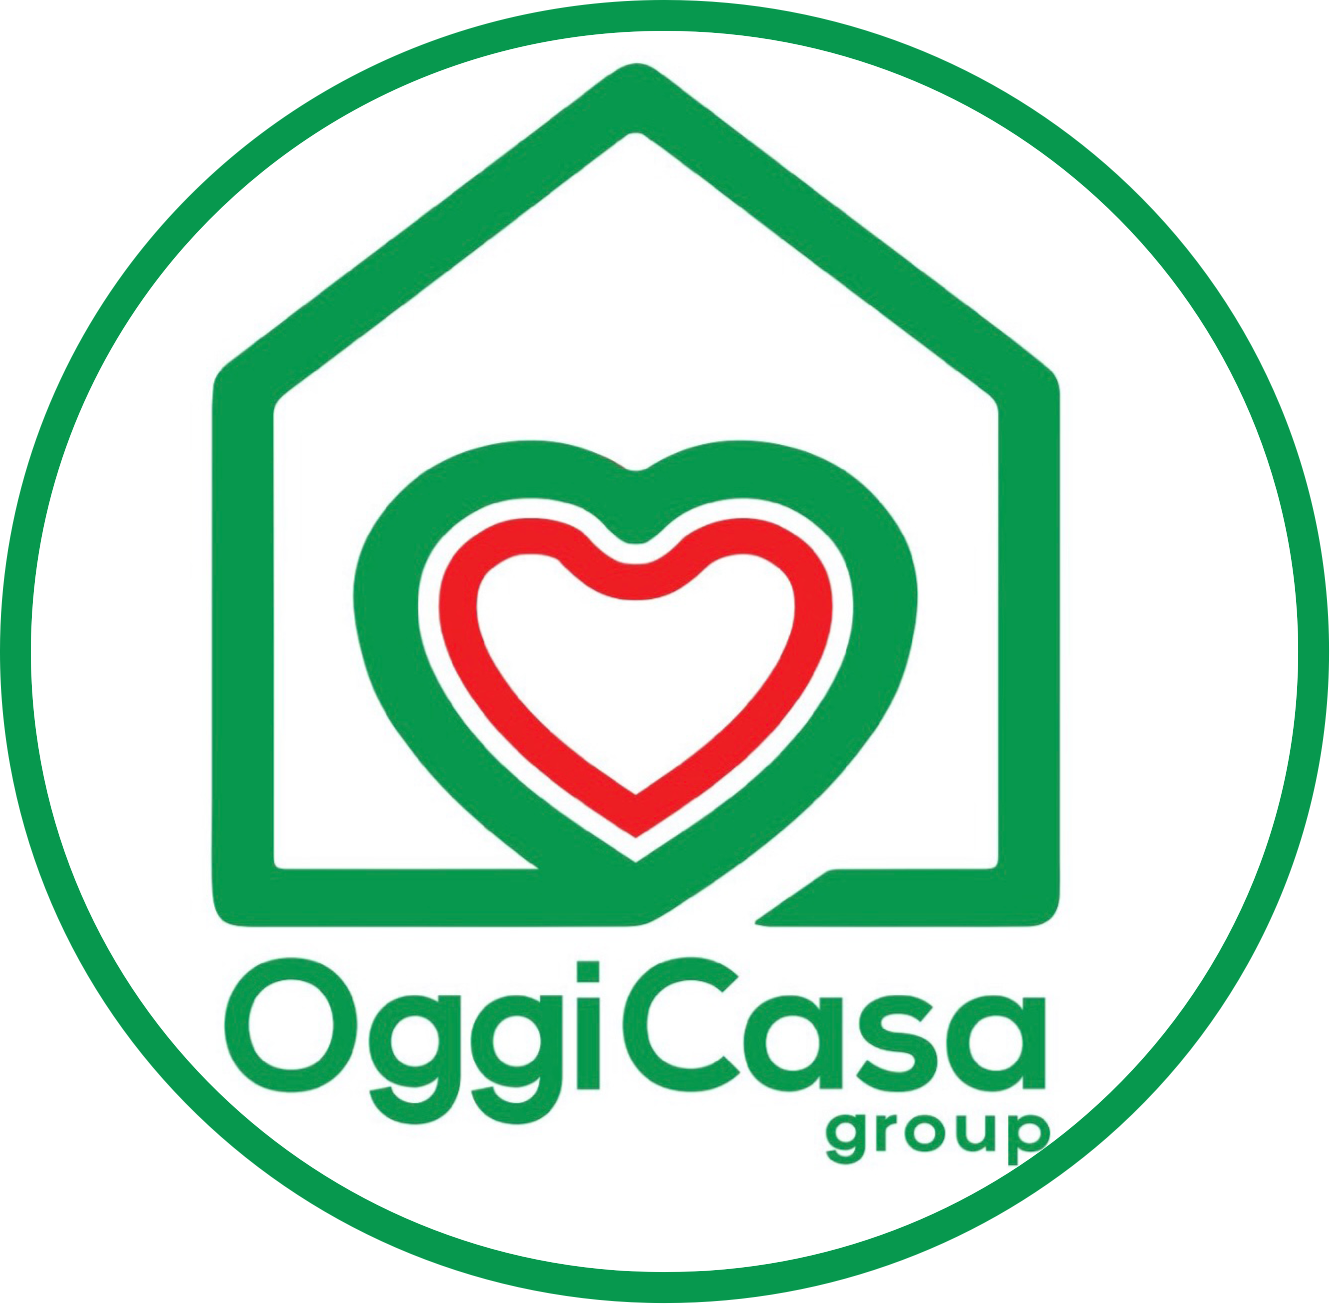 OggiCasa group srls